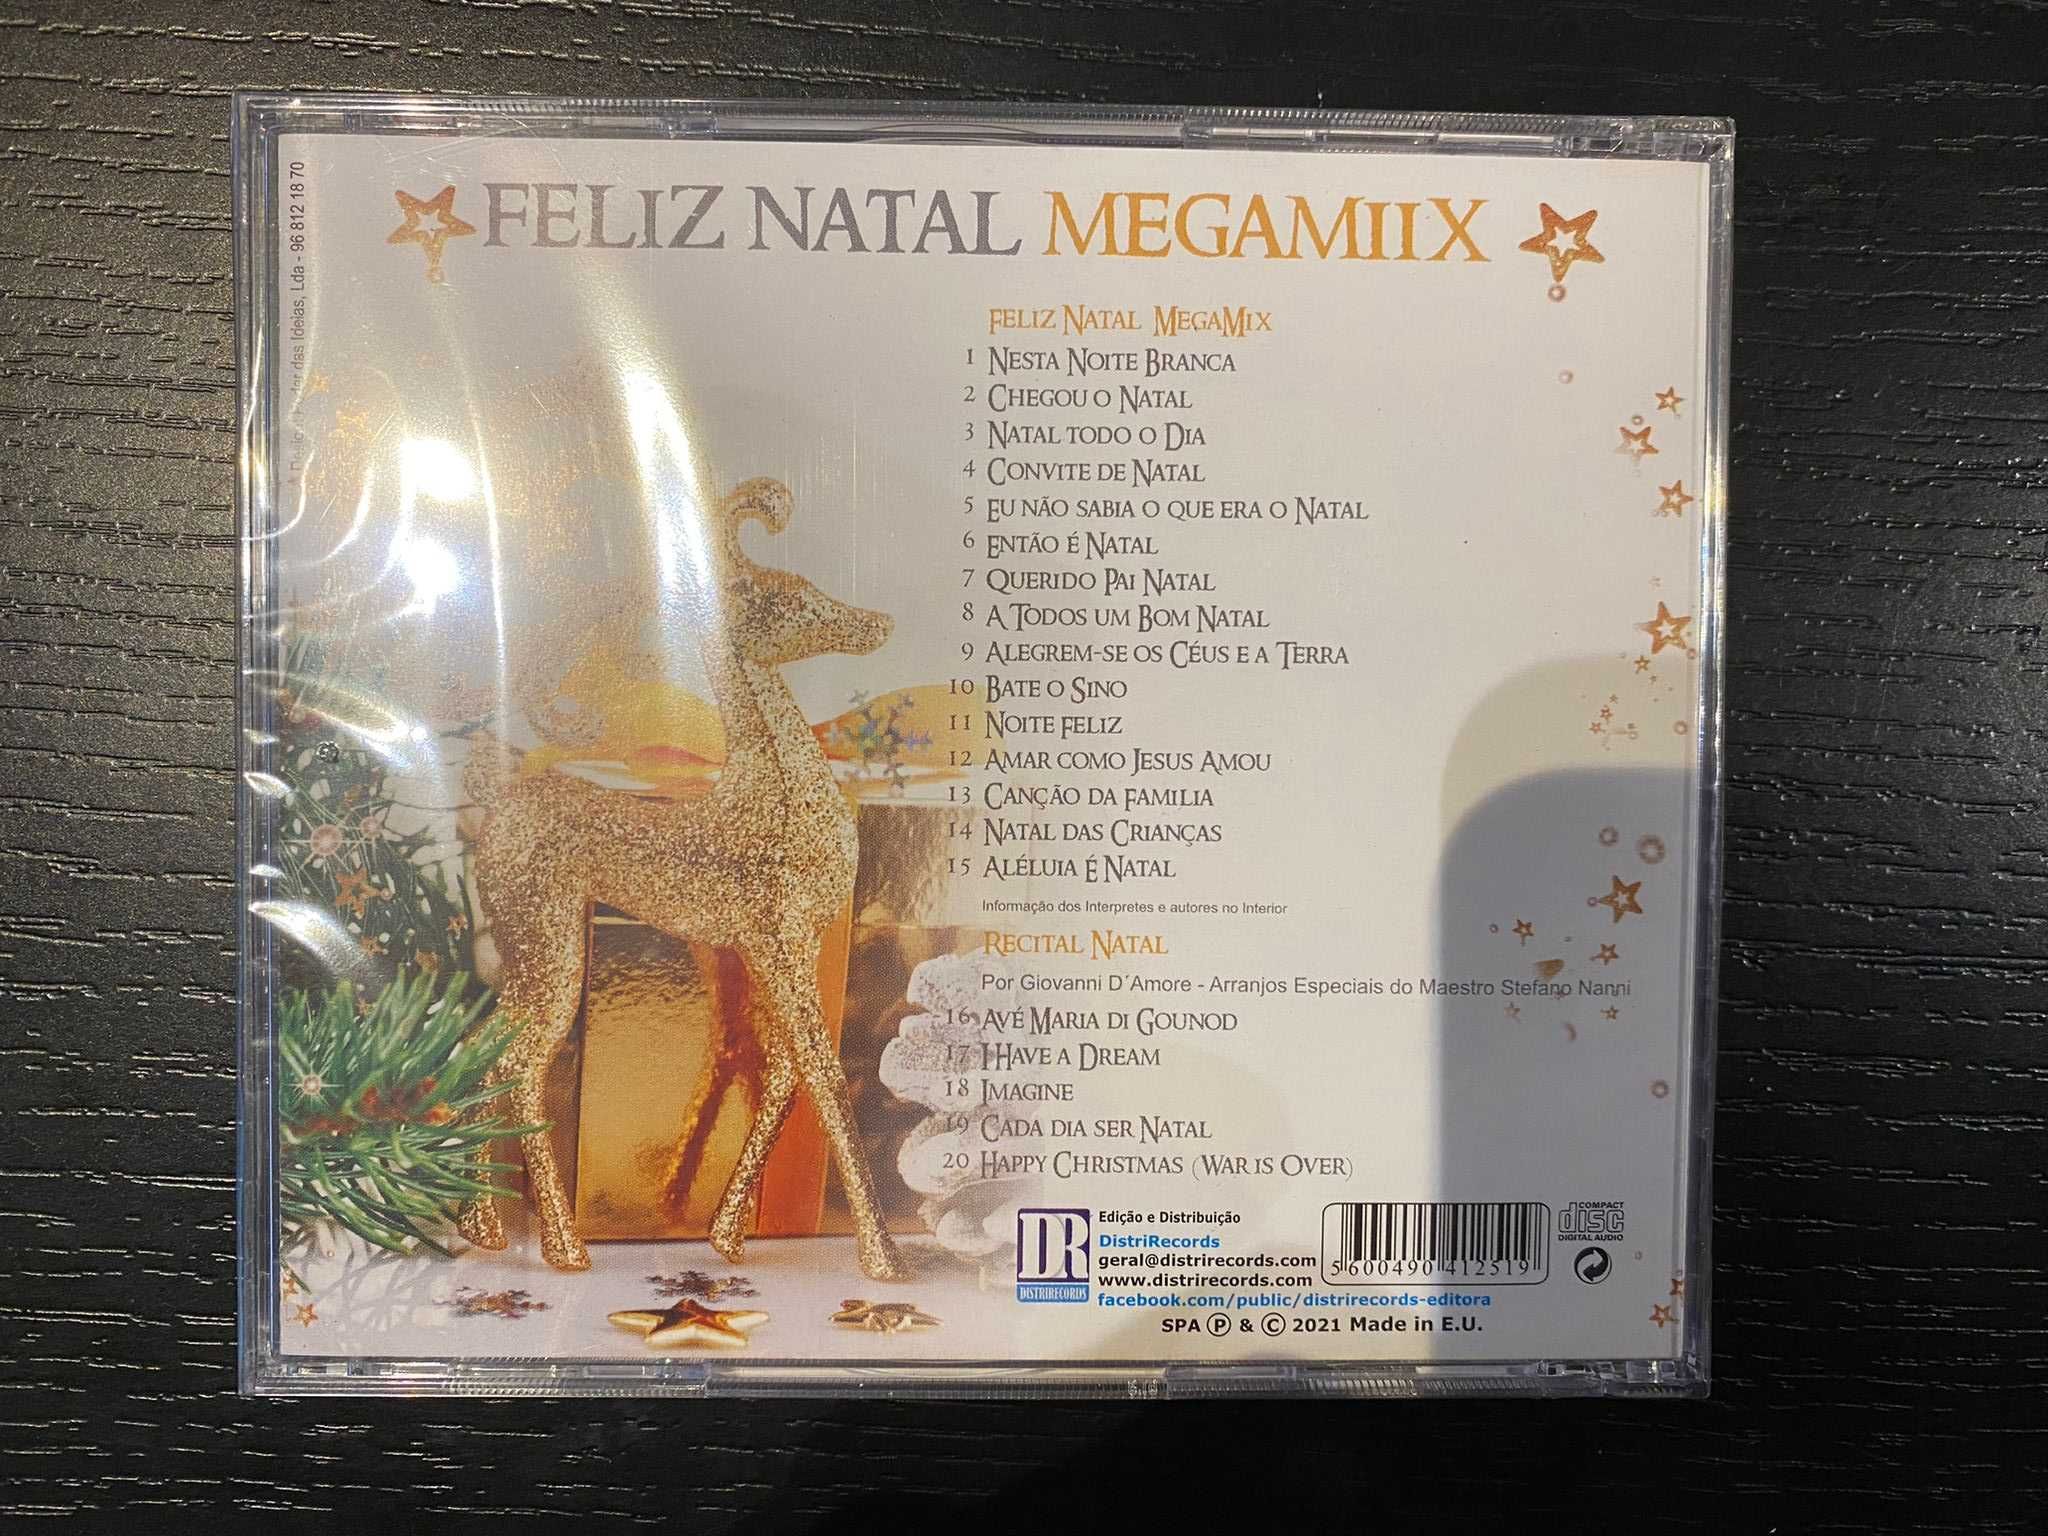 CD's de Natal/Ano Novo